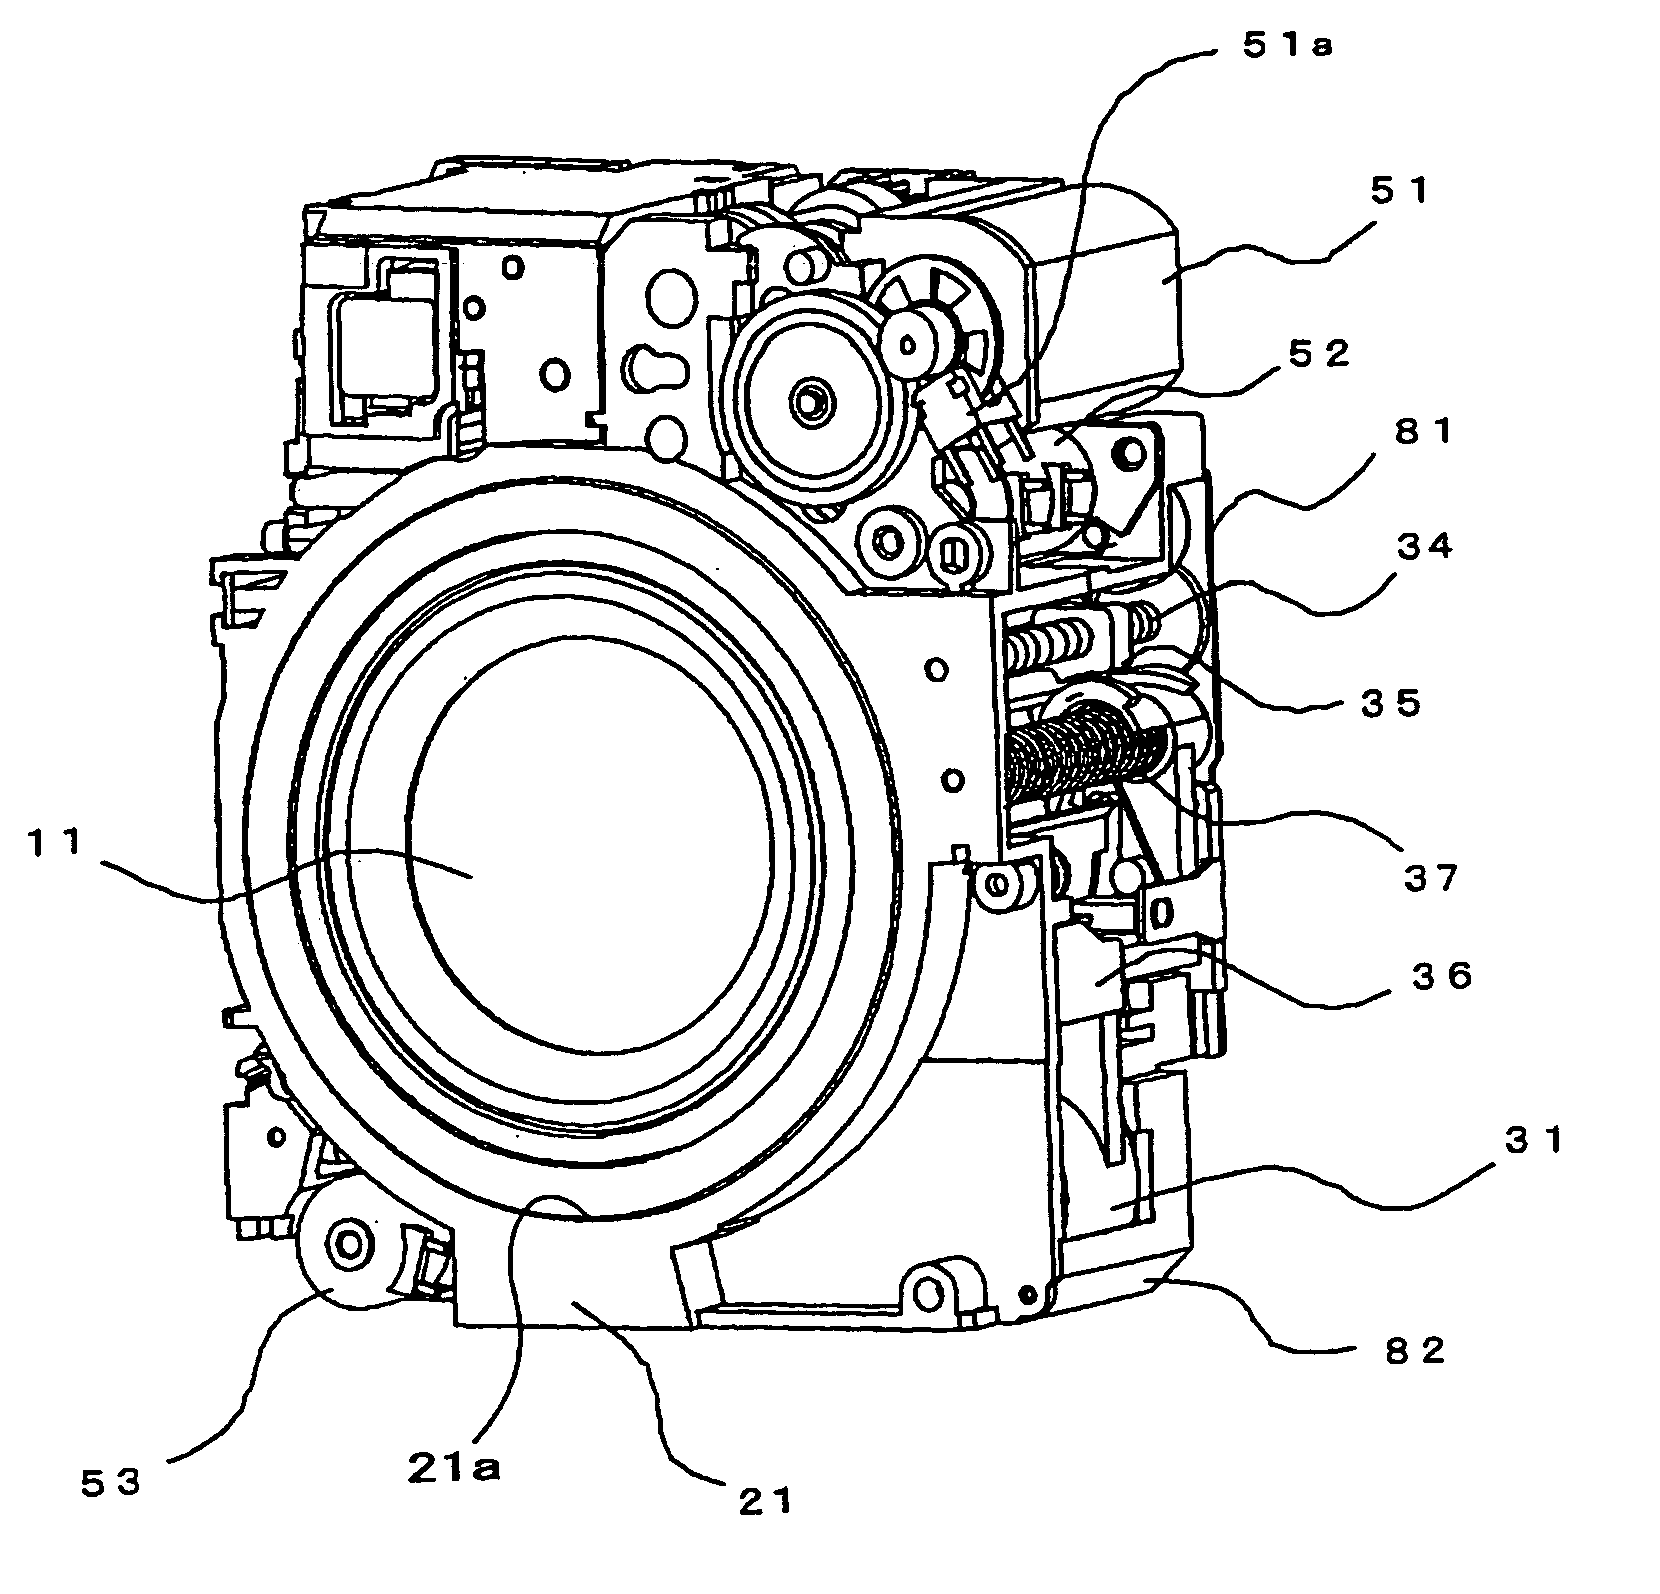 Lens barrel, camera, and mobile information terminal